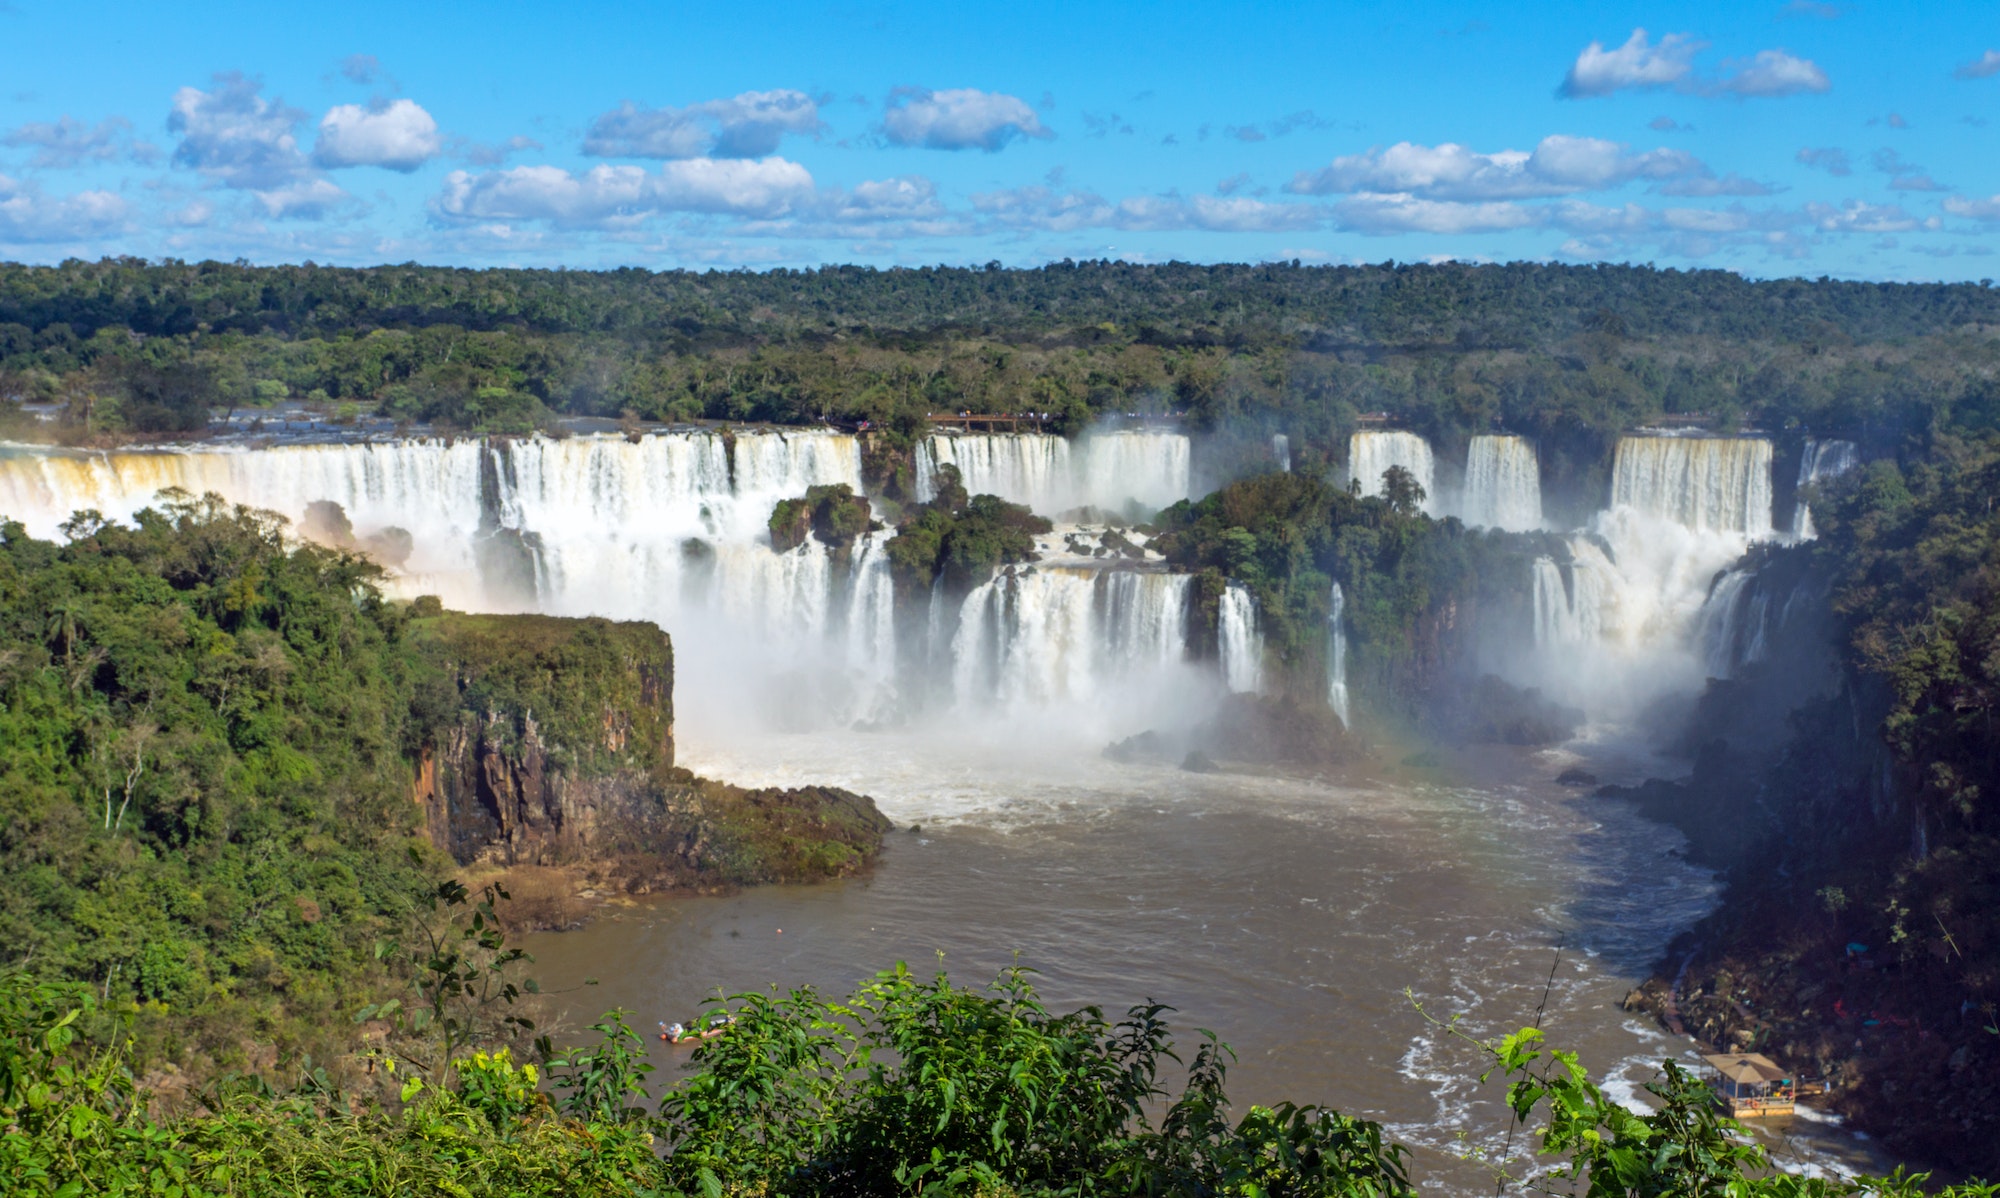 The Iguazu falls in Argentina